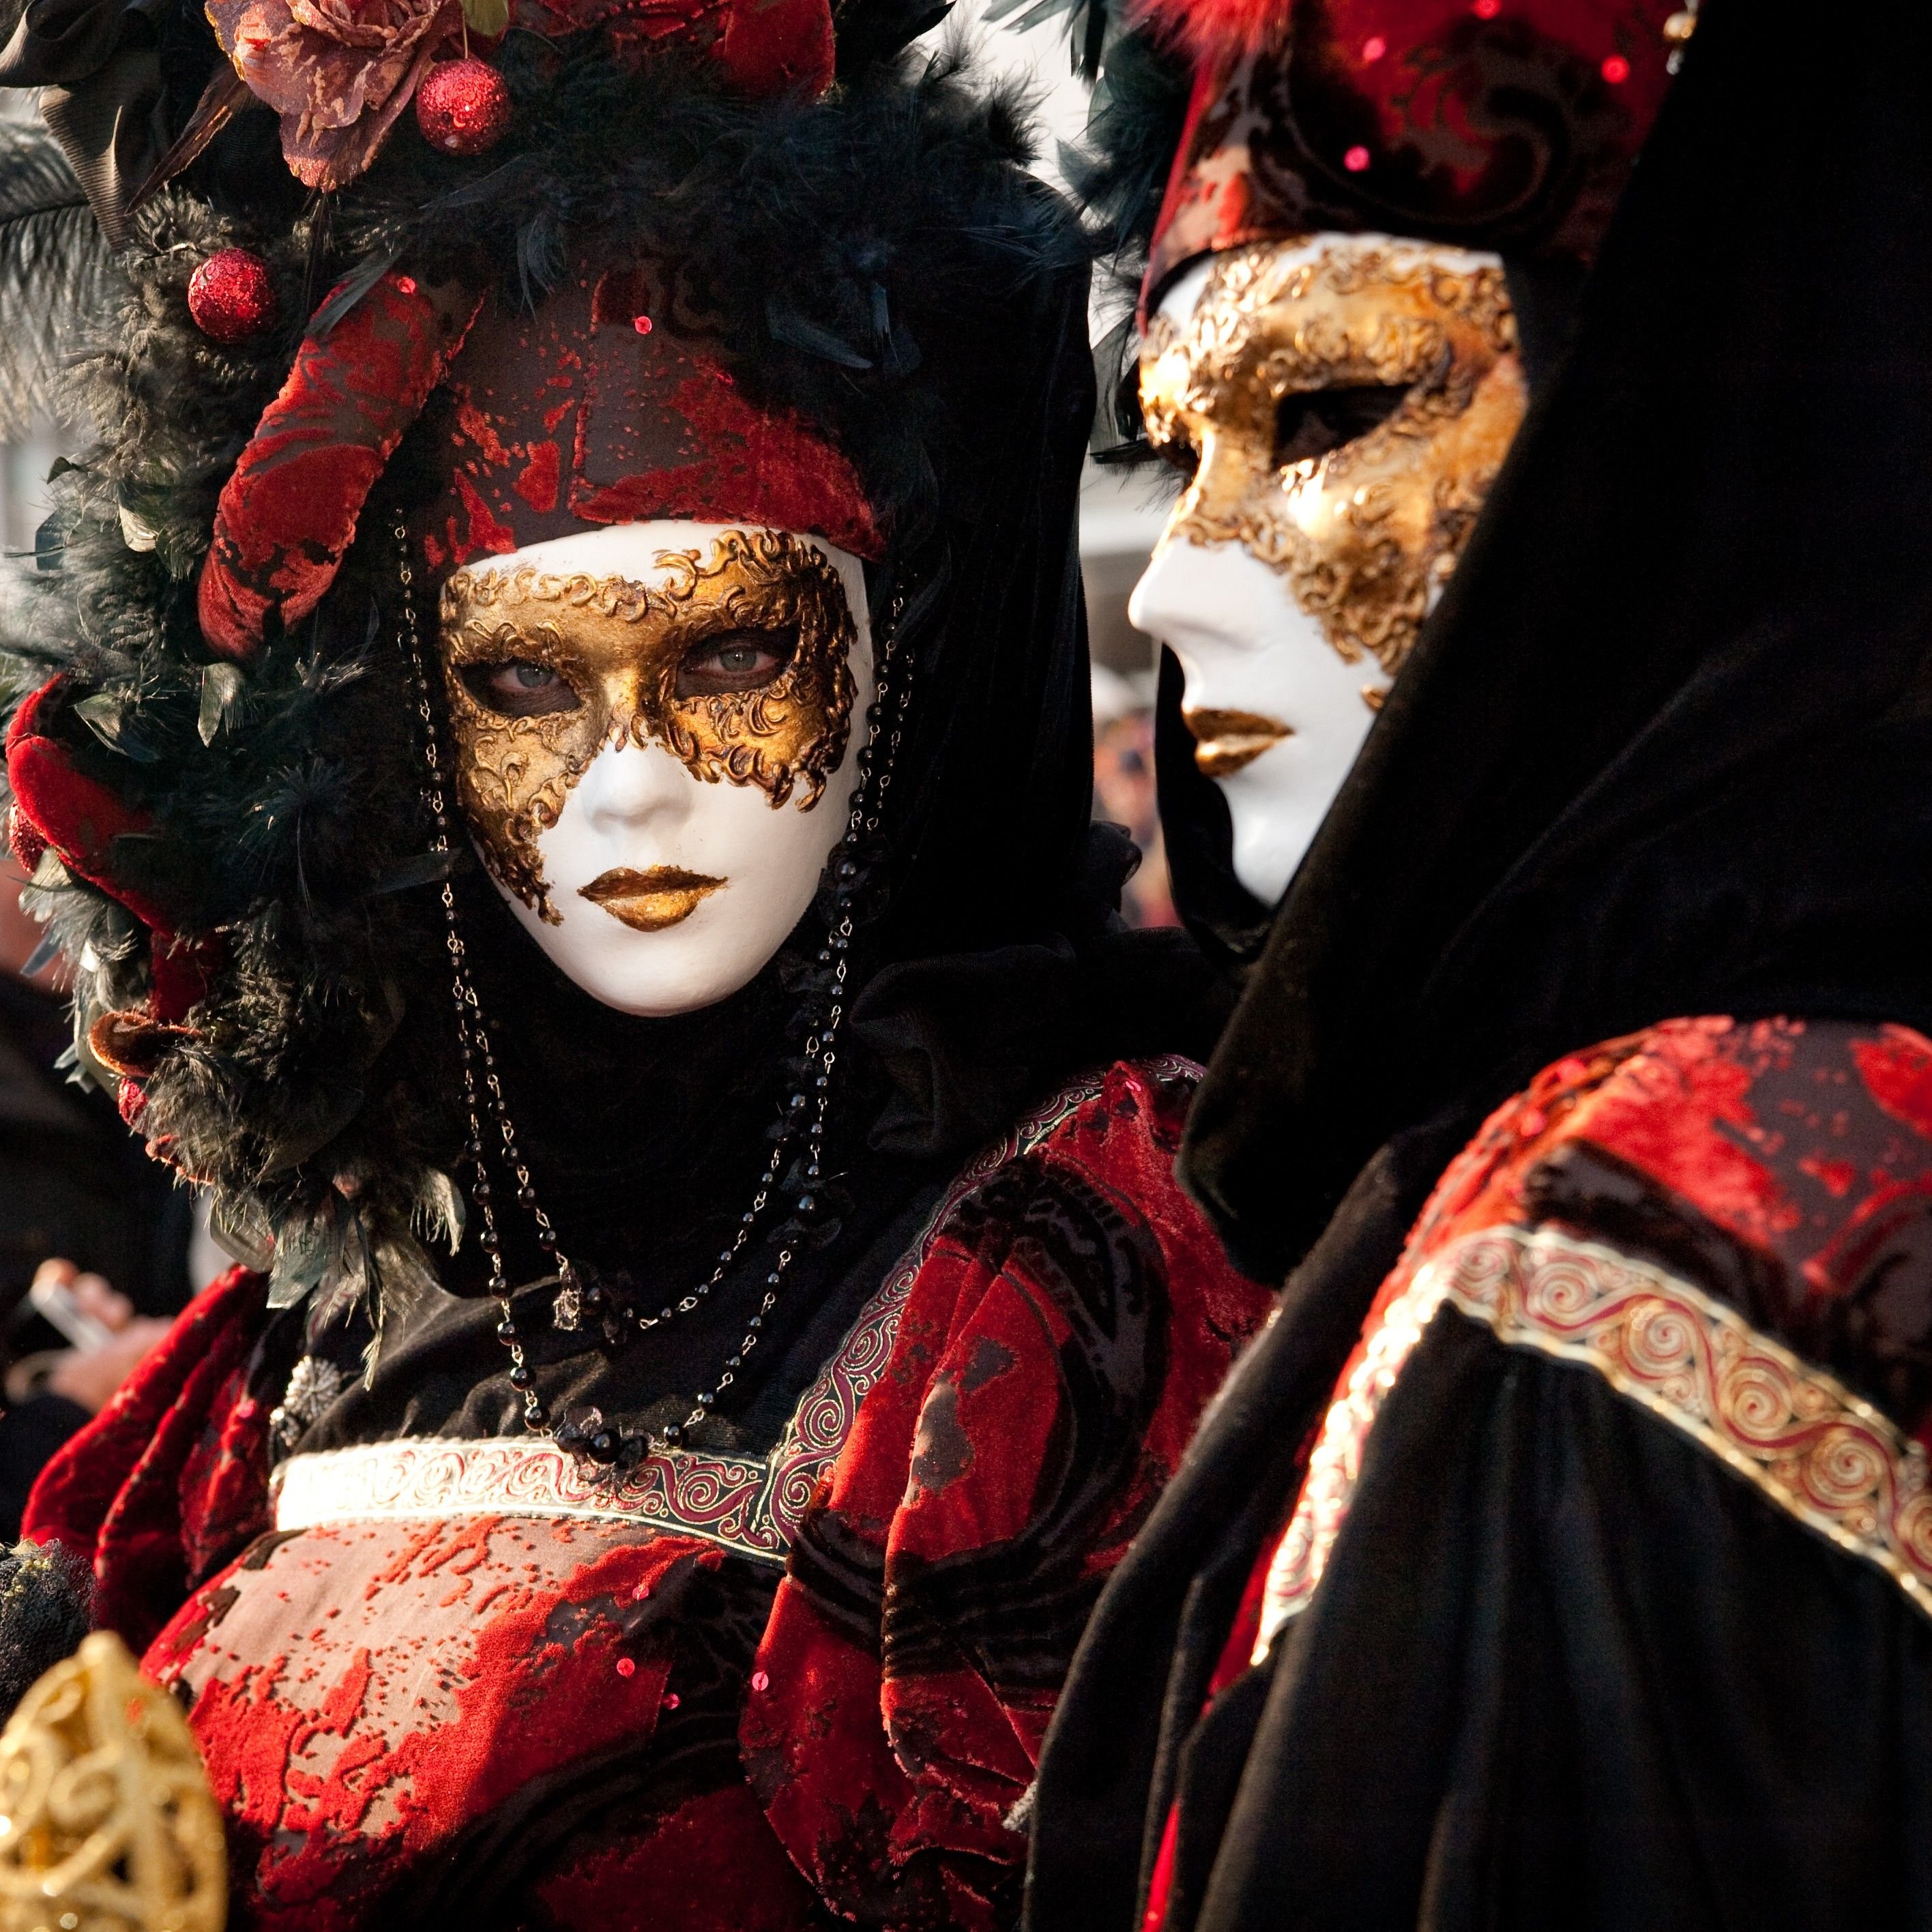 Театр маска бовари. Бал маскарад Венеция. Венецианская маска карнавал в Венеции. Венецианская маска Маттачино. Карнавал бал маска венецианская.